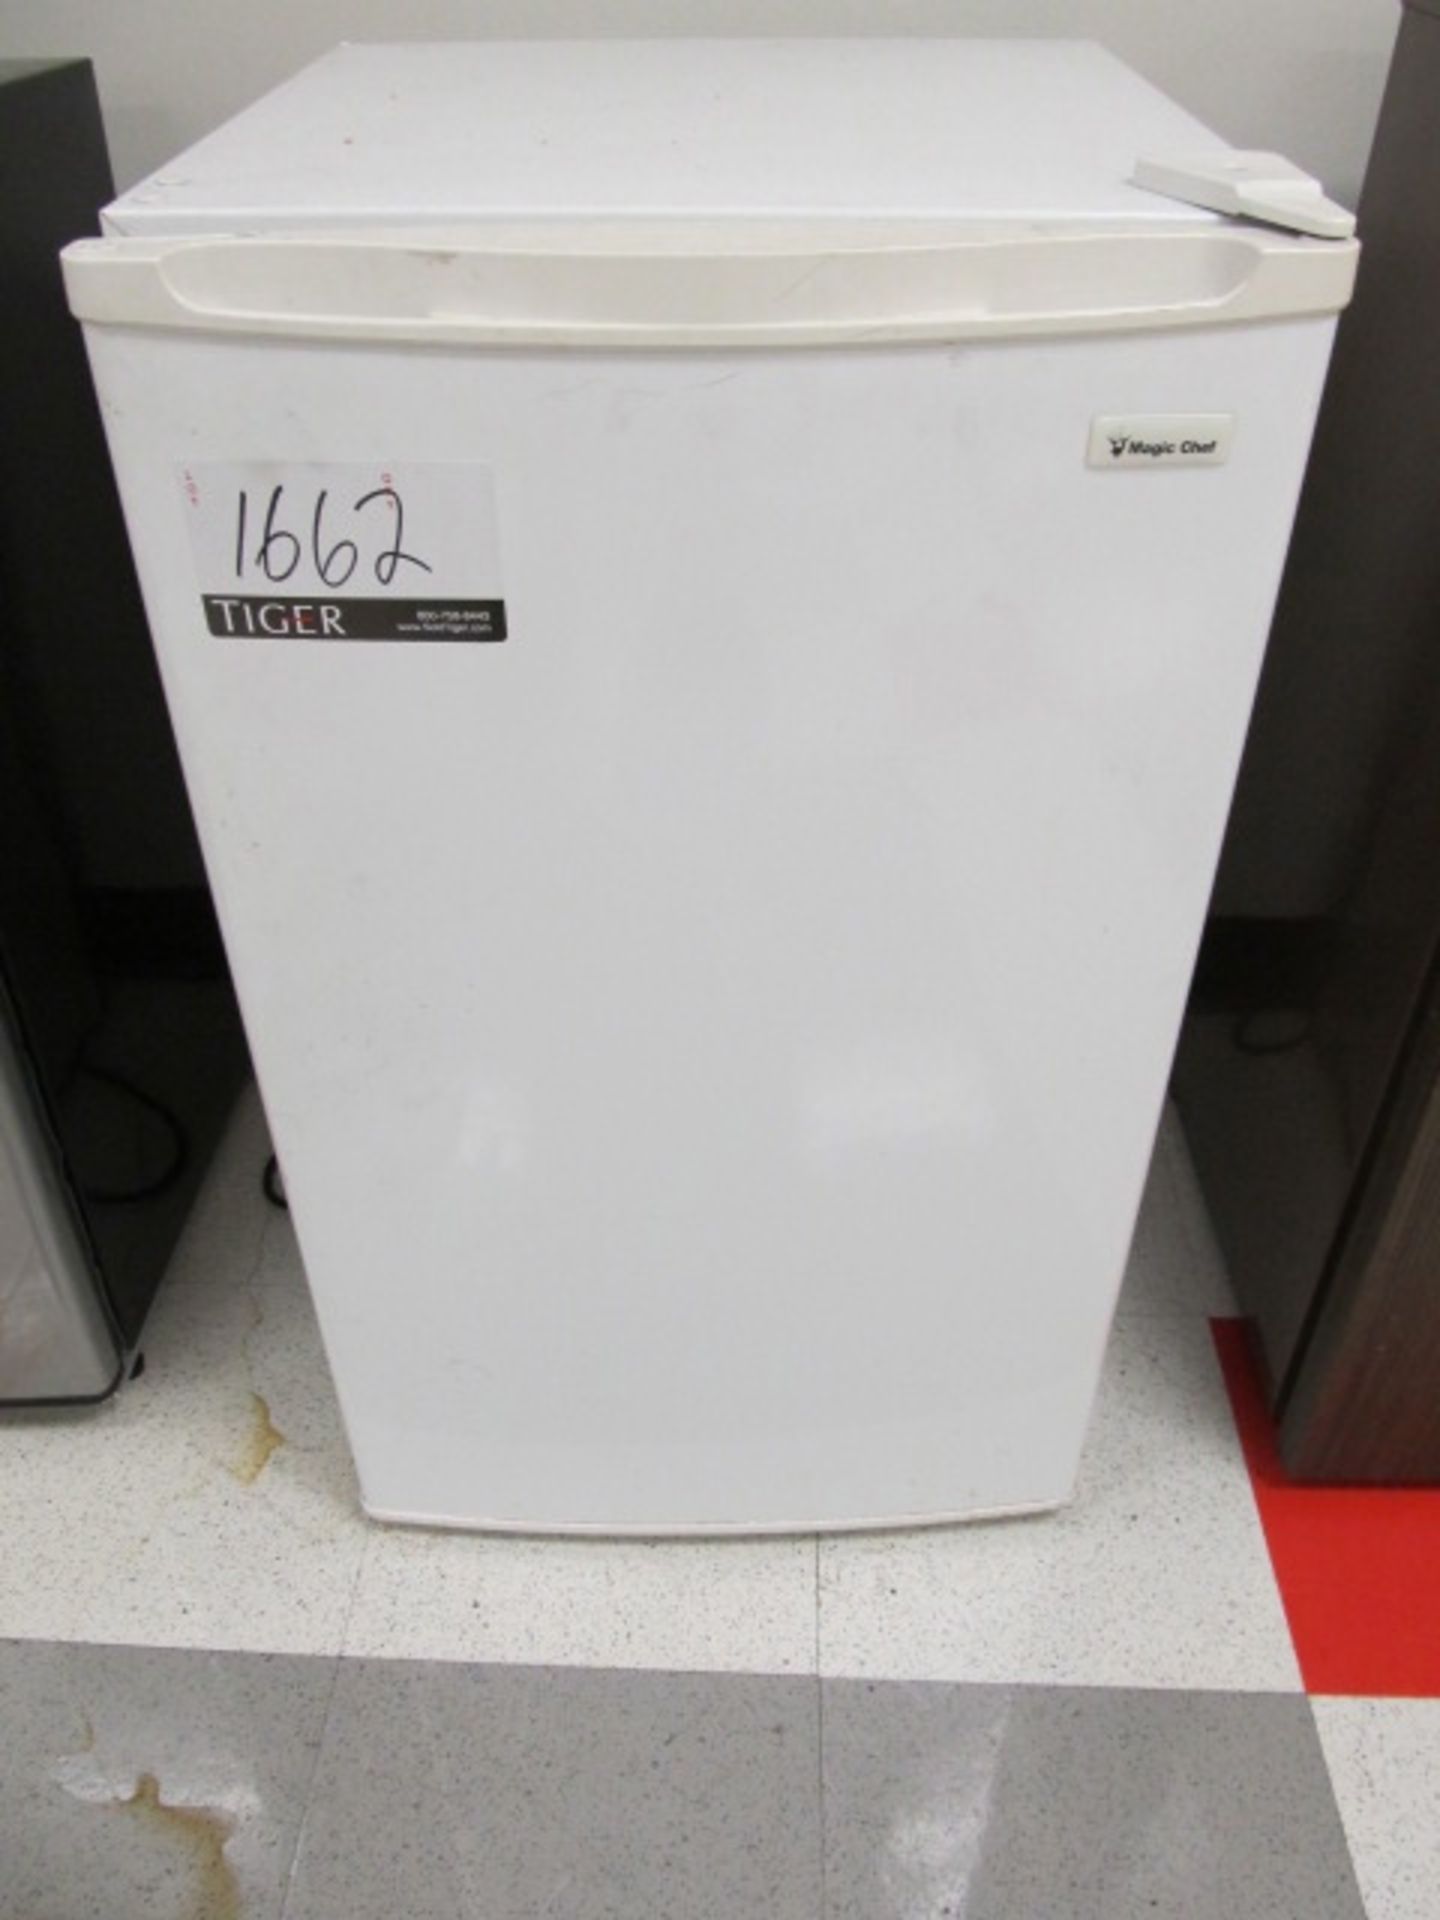 Magic Chef Mini Refrigerator. Asset Location: Break Room, Site Location: Mira Loma, CA